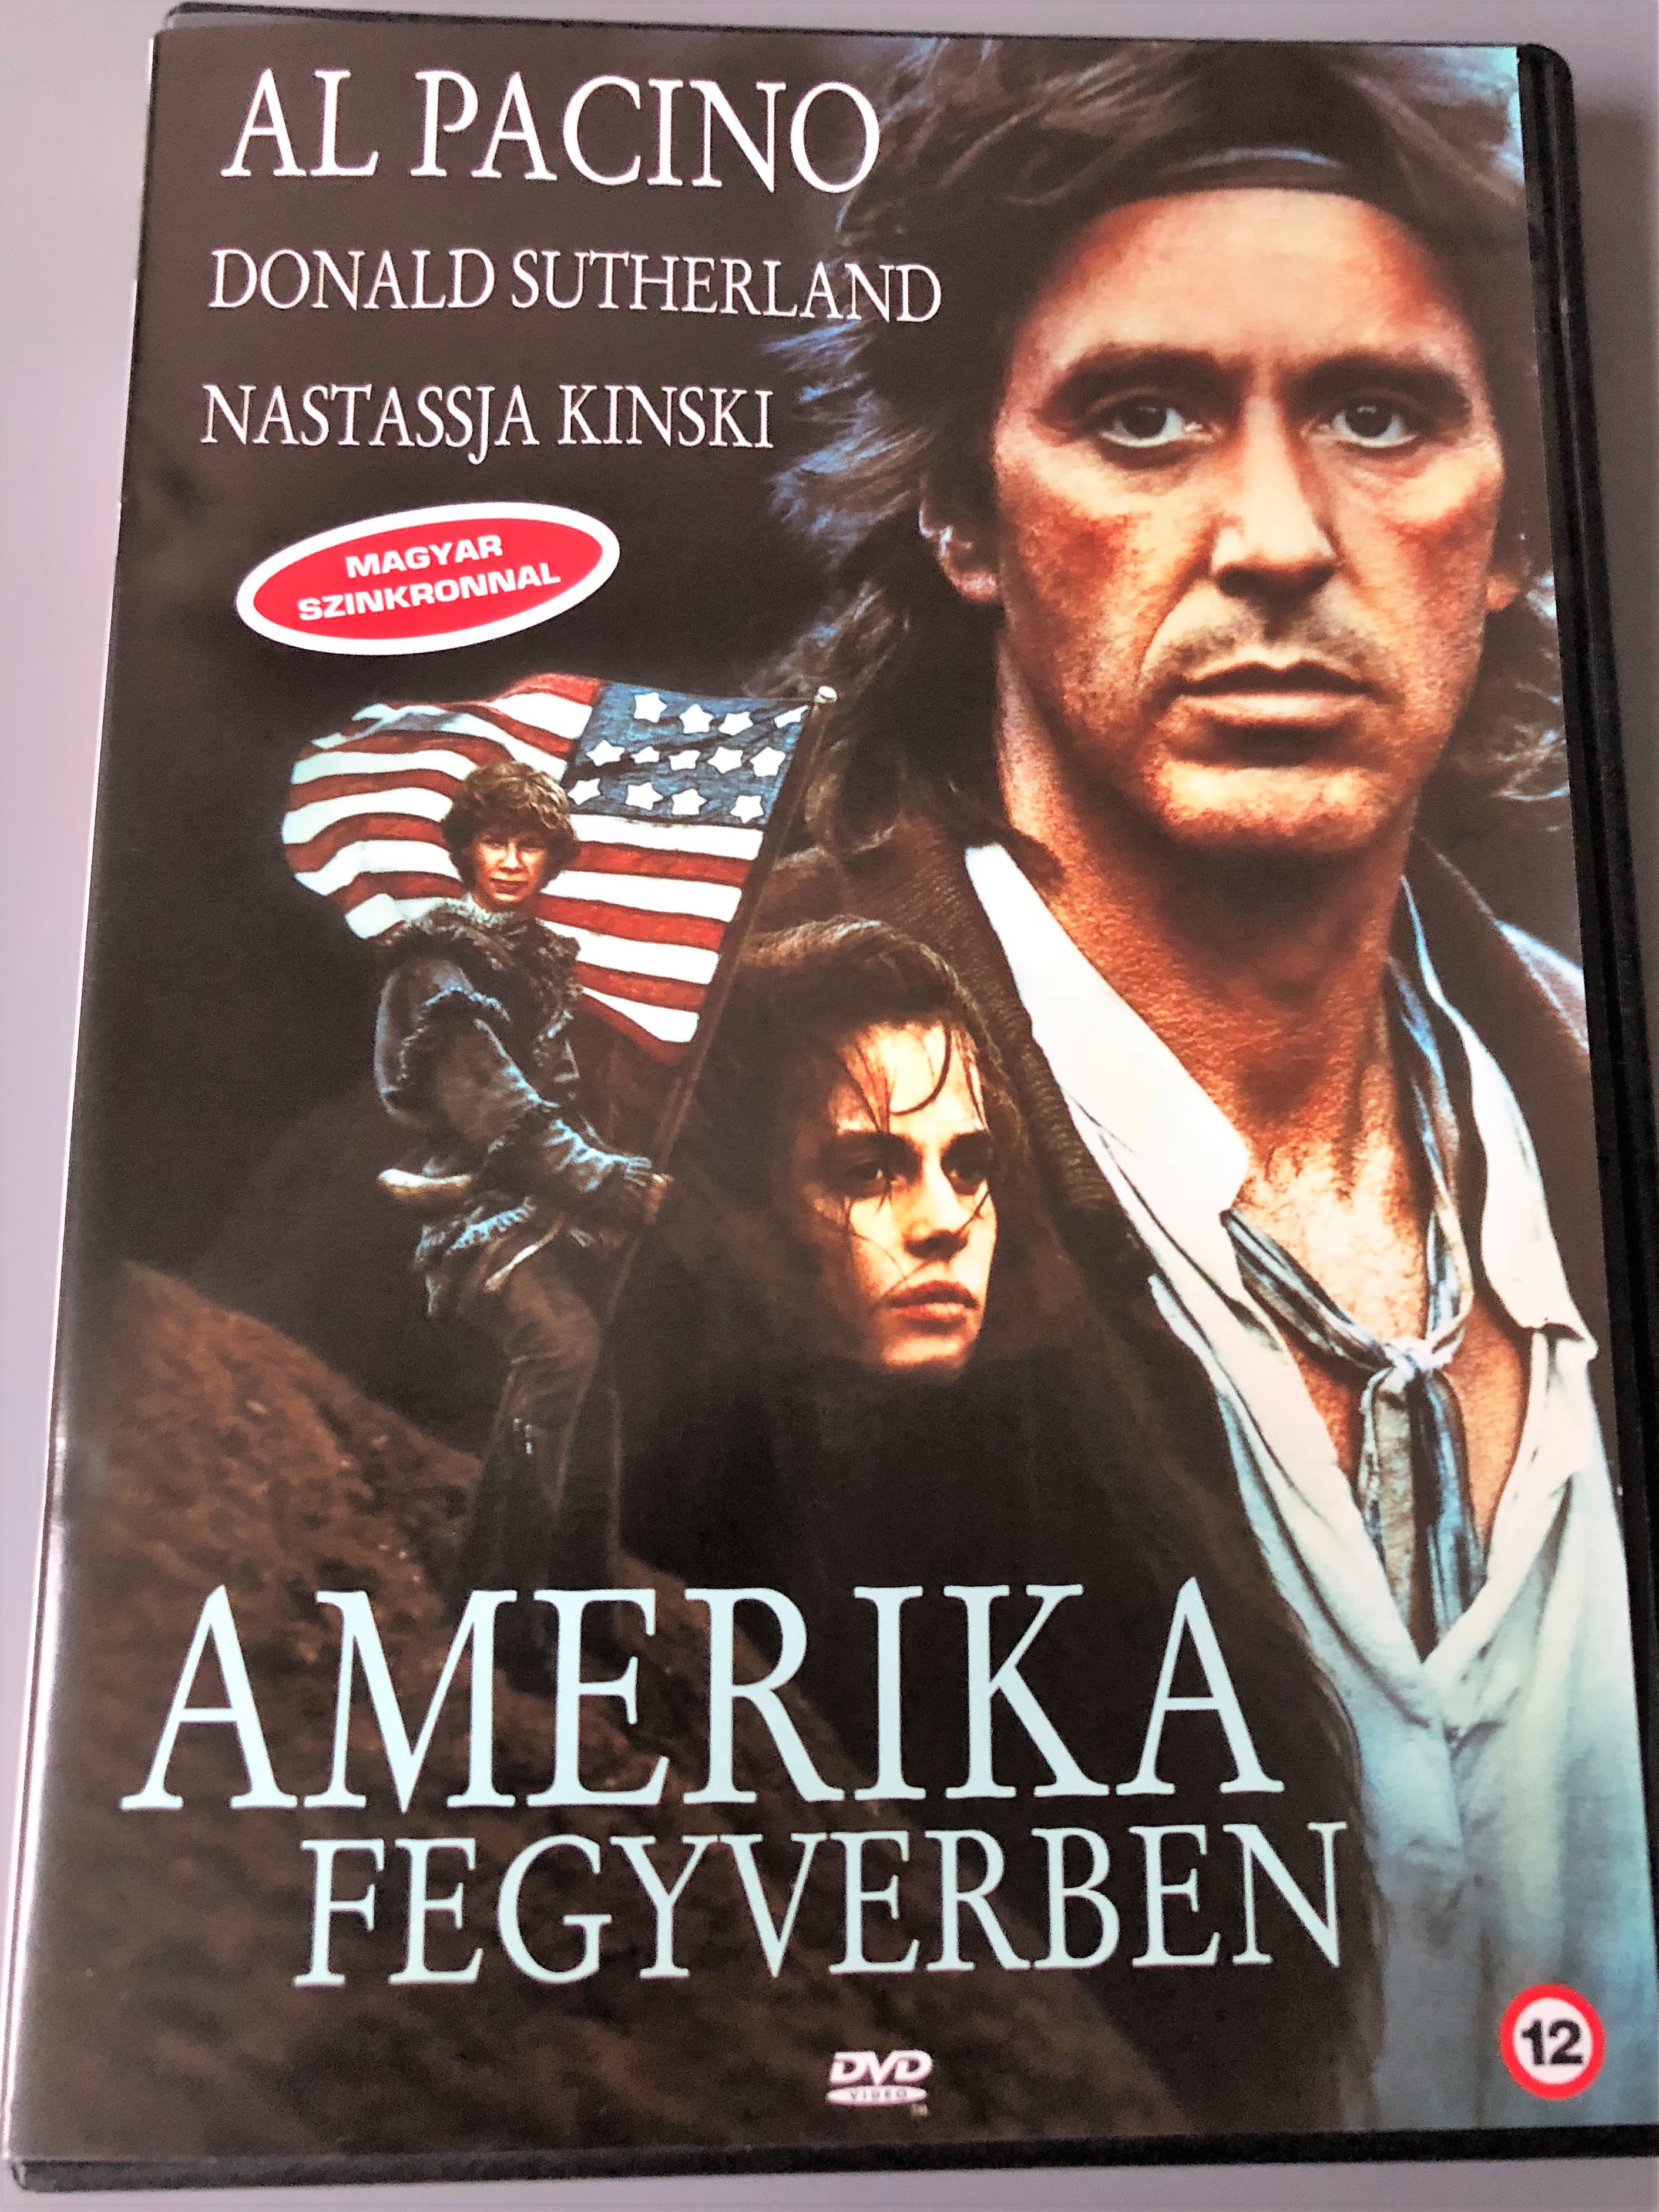 -revolution-dvd-amerika-fegyverben-directed-by-hugh-hudson-starring-al-pacino-donald-sutherland-nastassja-kinski-1-.jpg